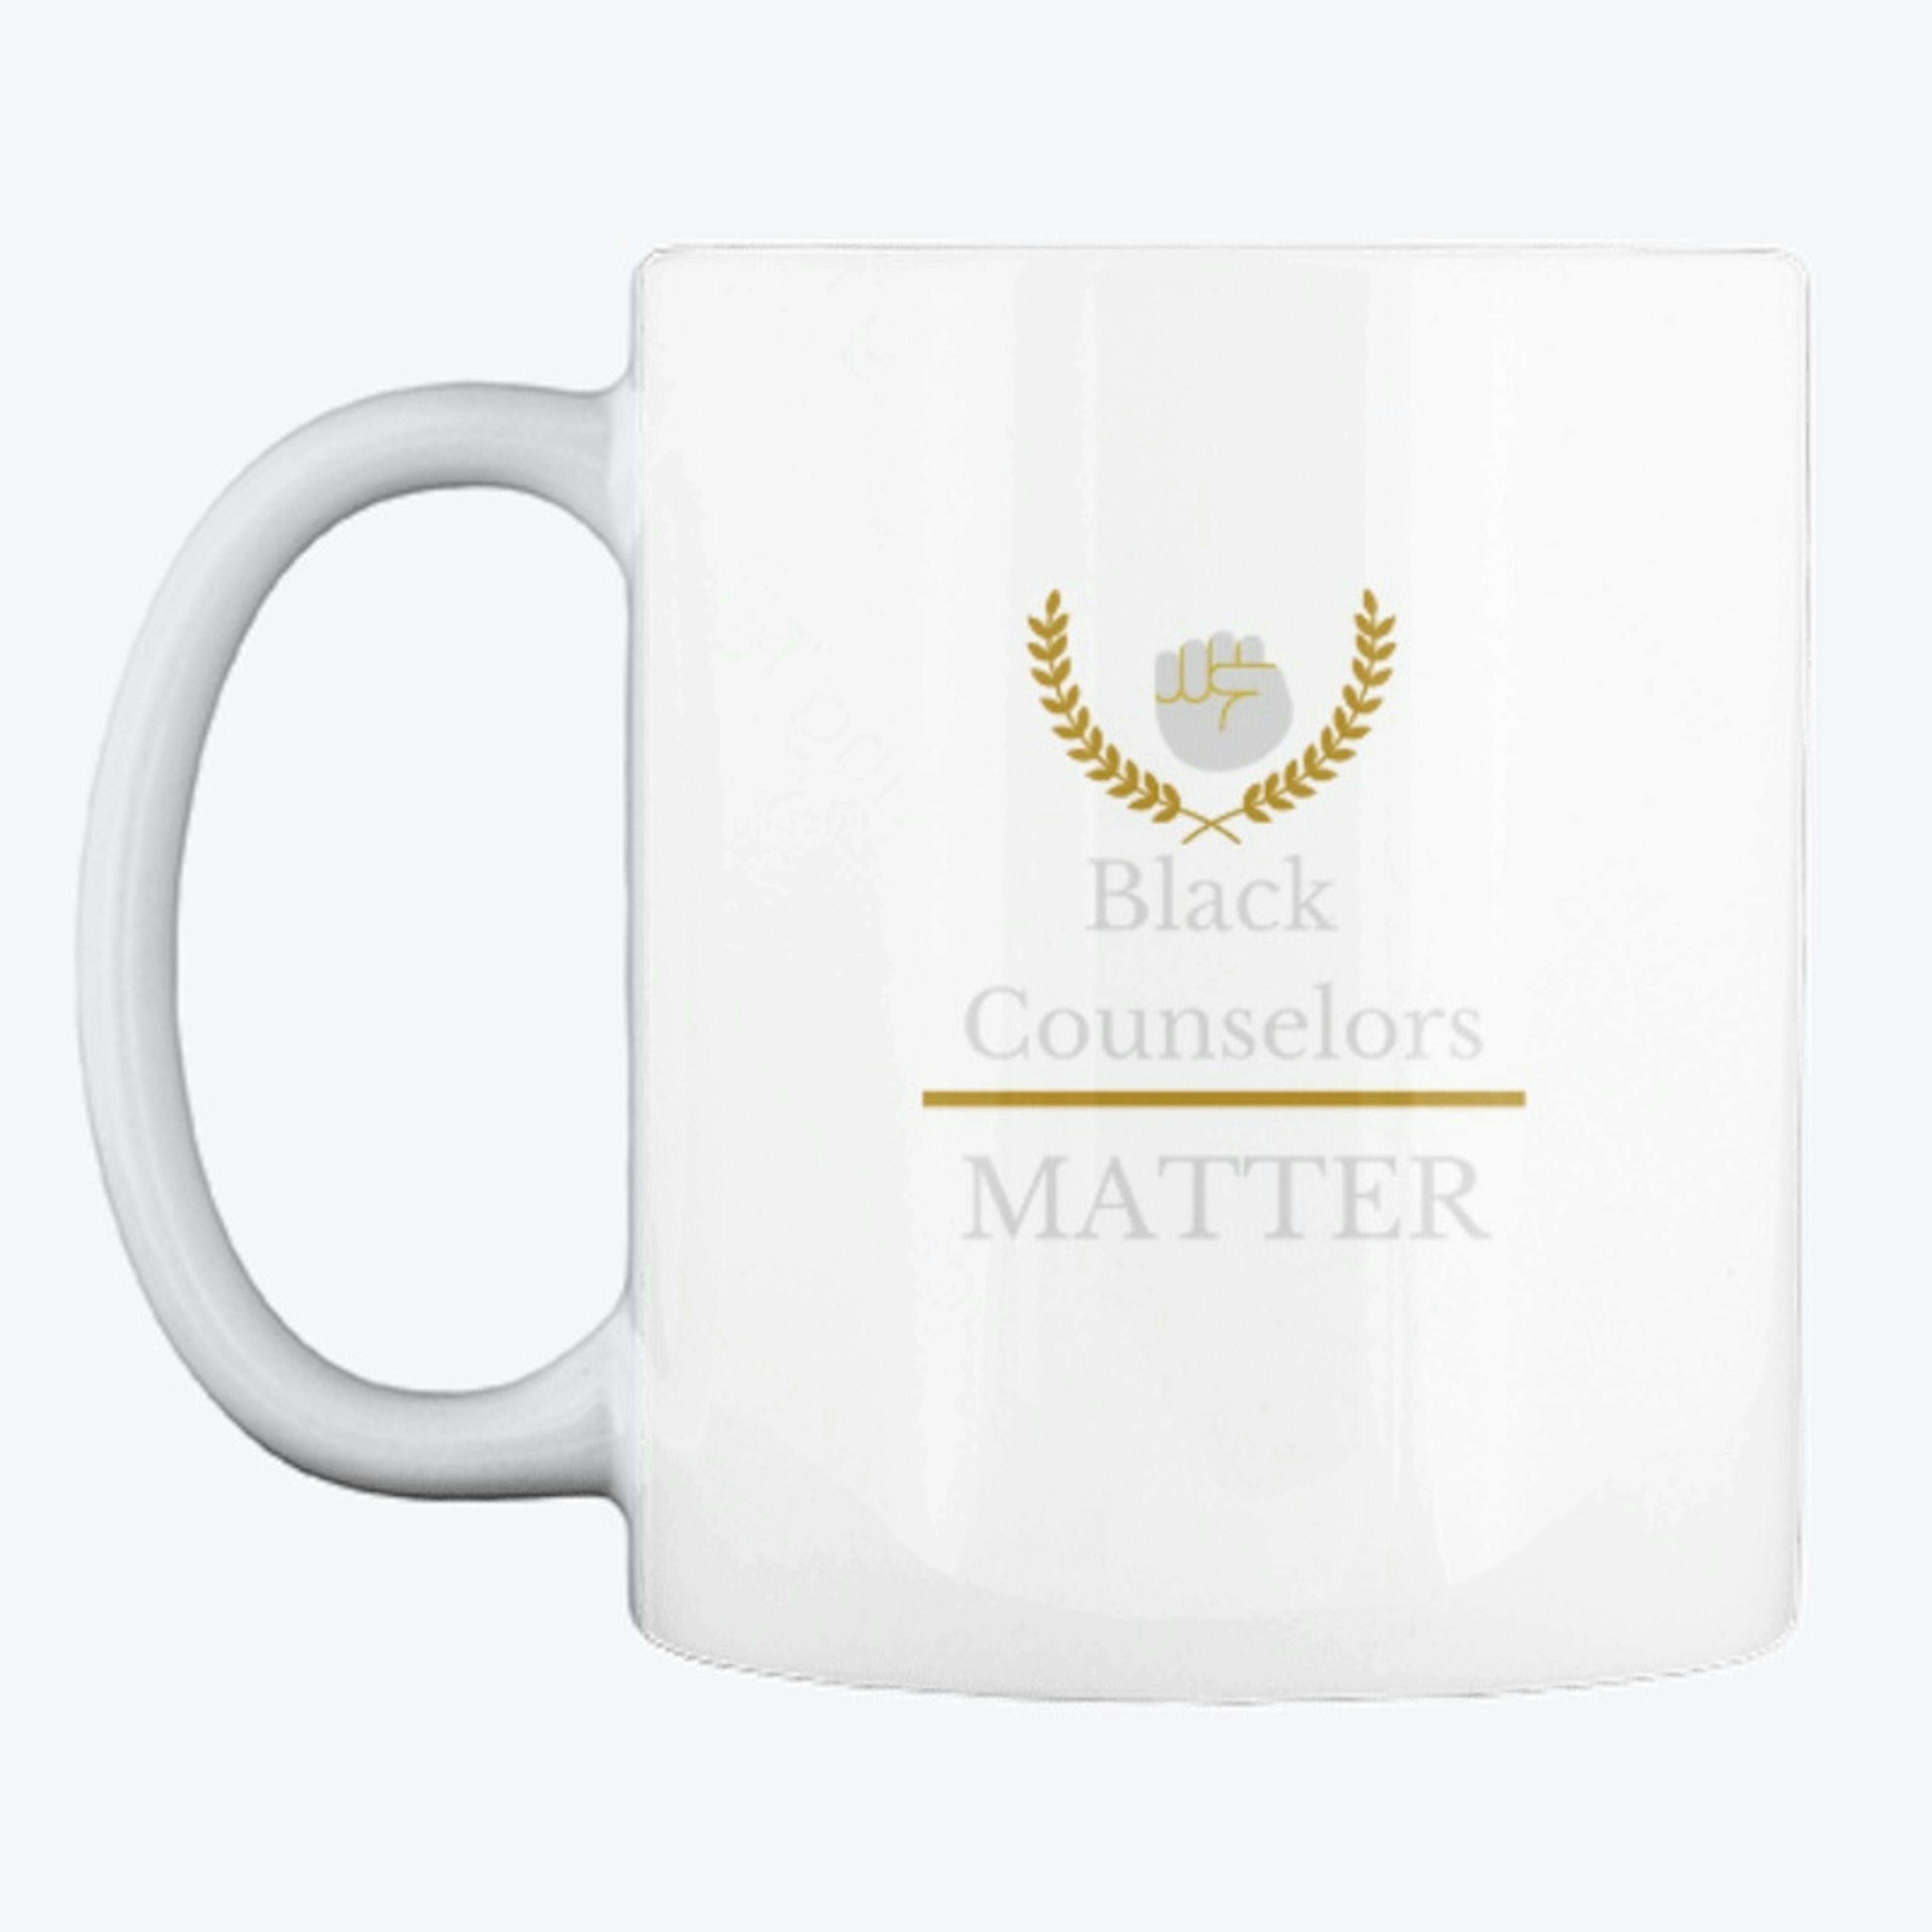 Black Counselors Matter